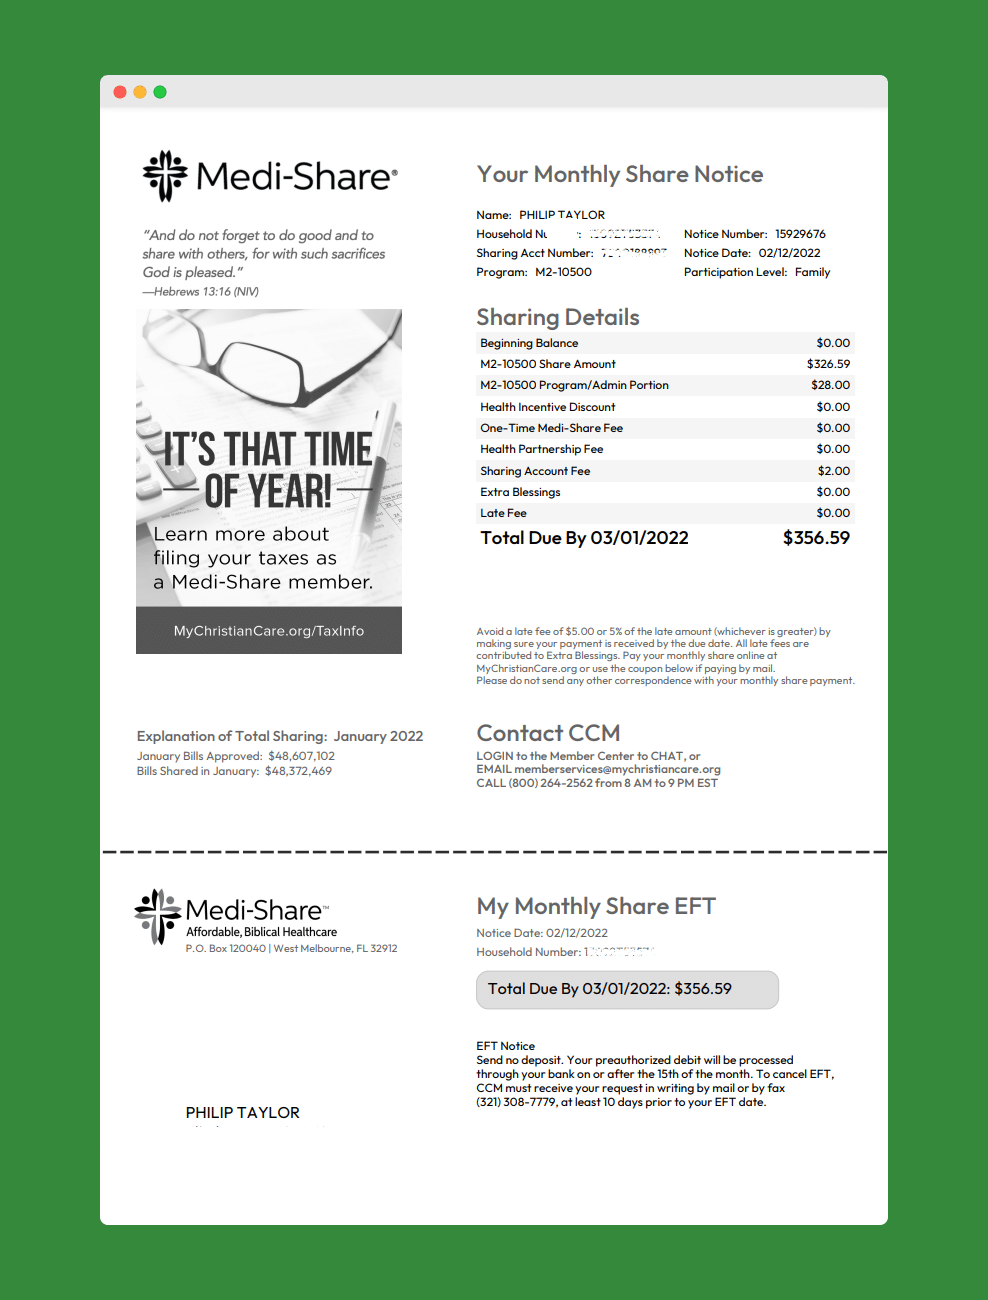 Medi-Share Monthly Share Notice Bill